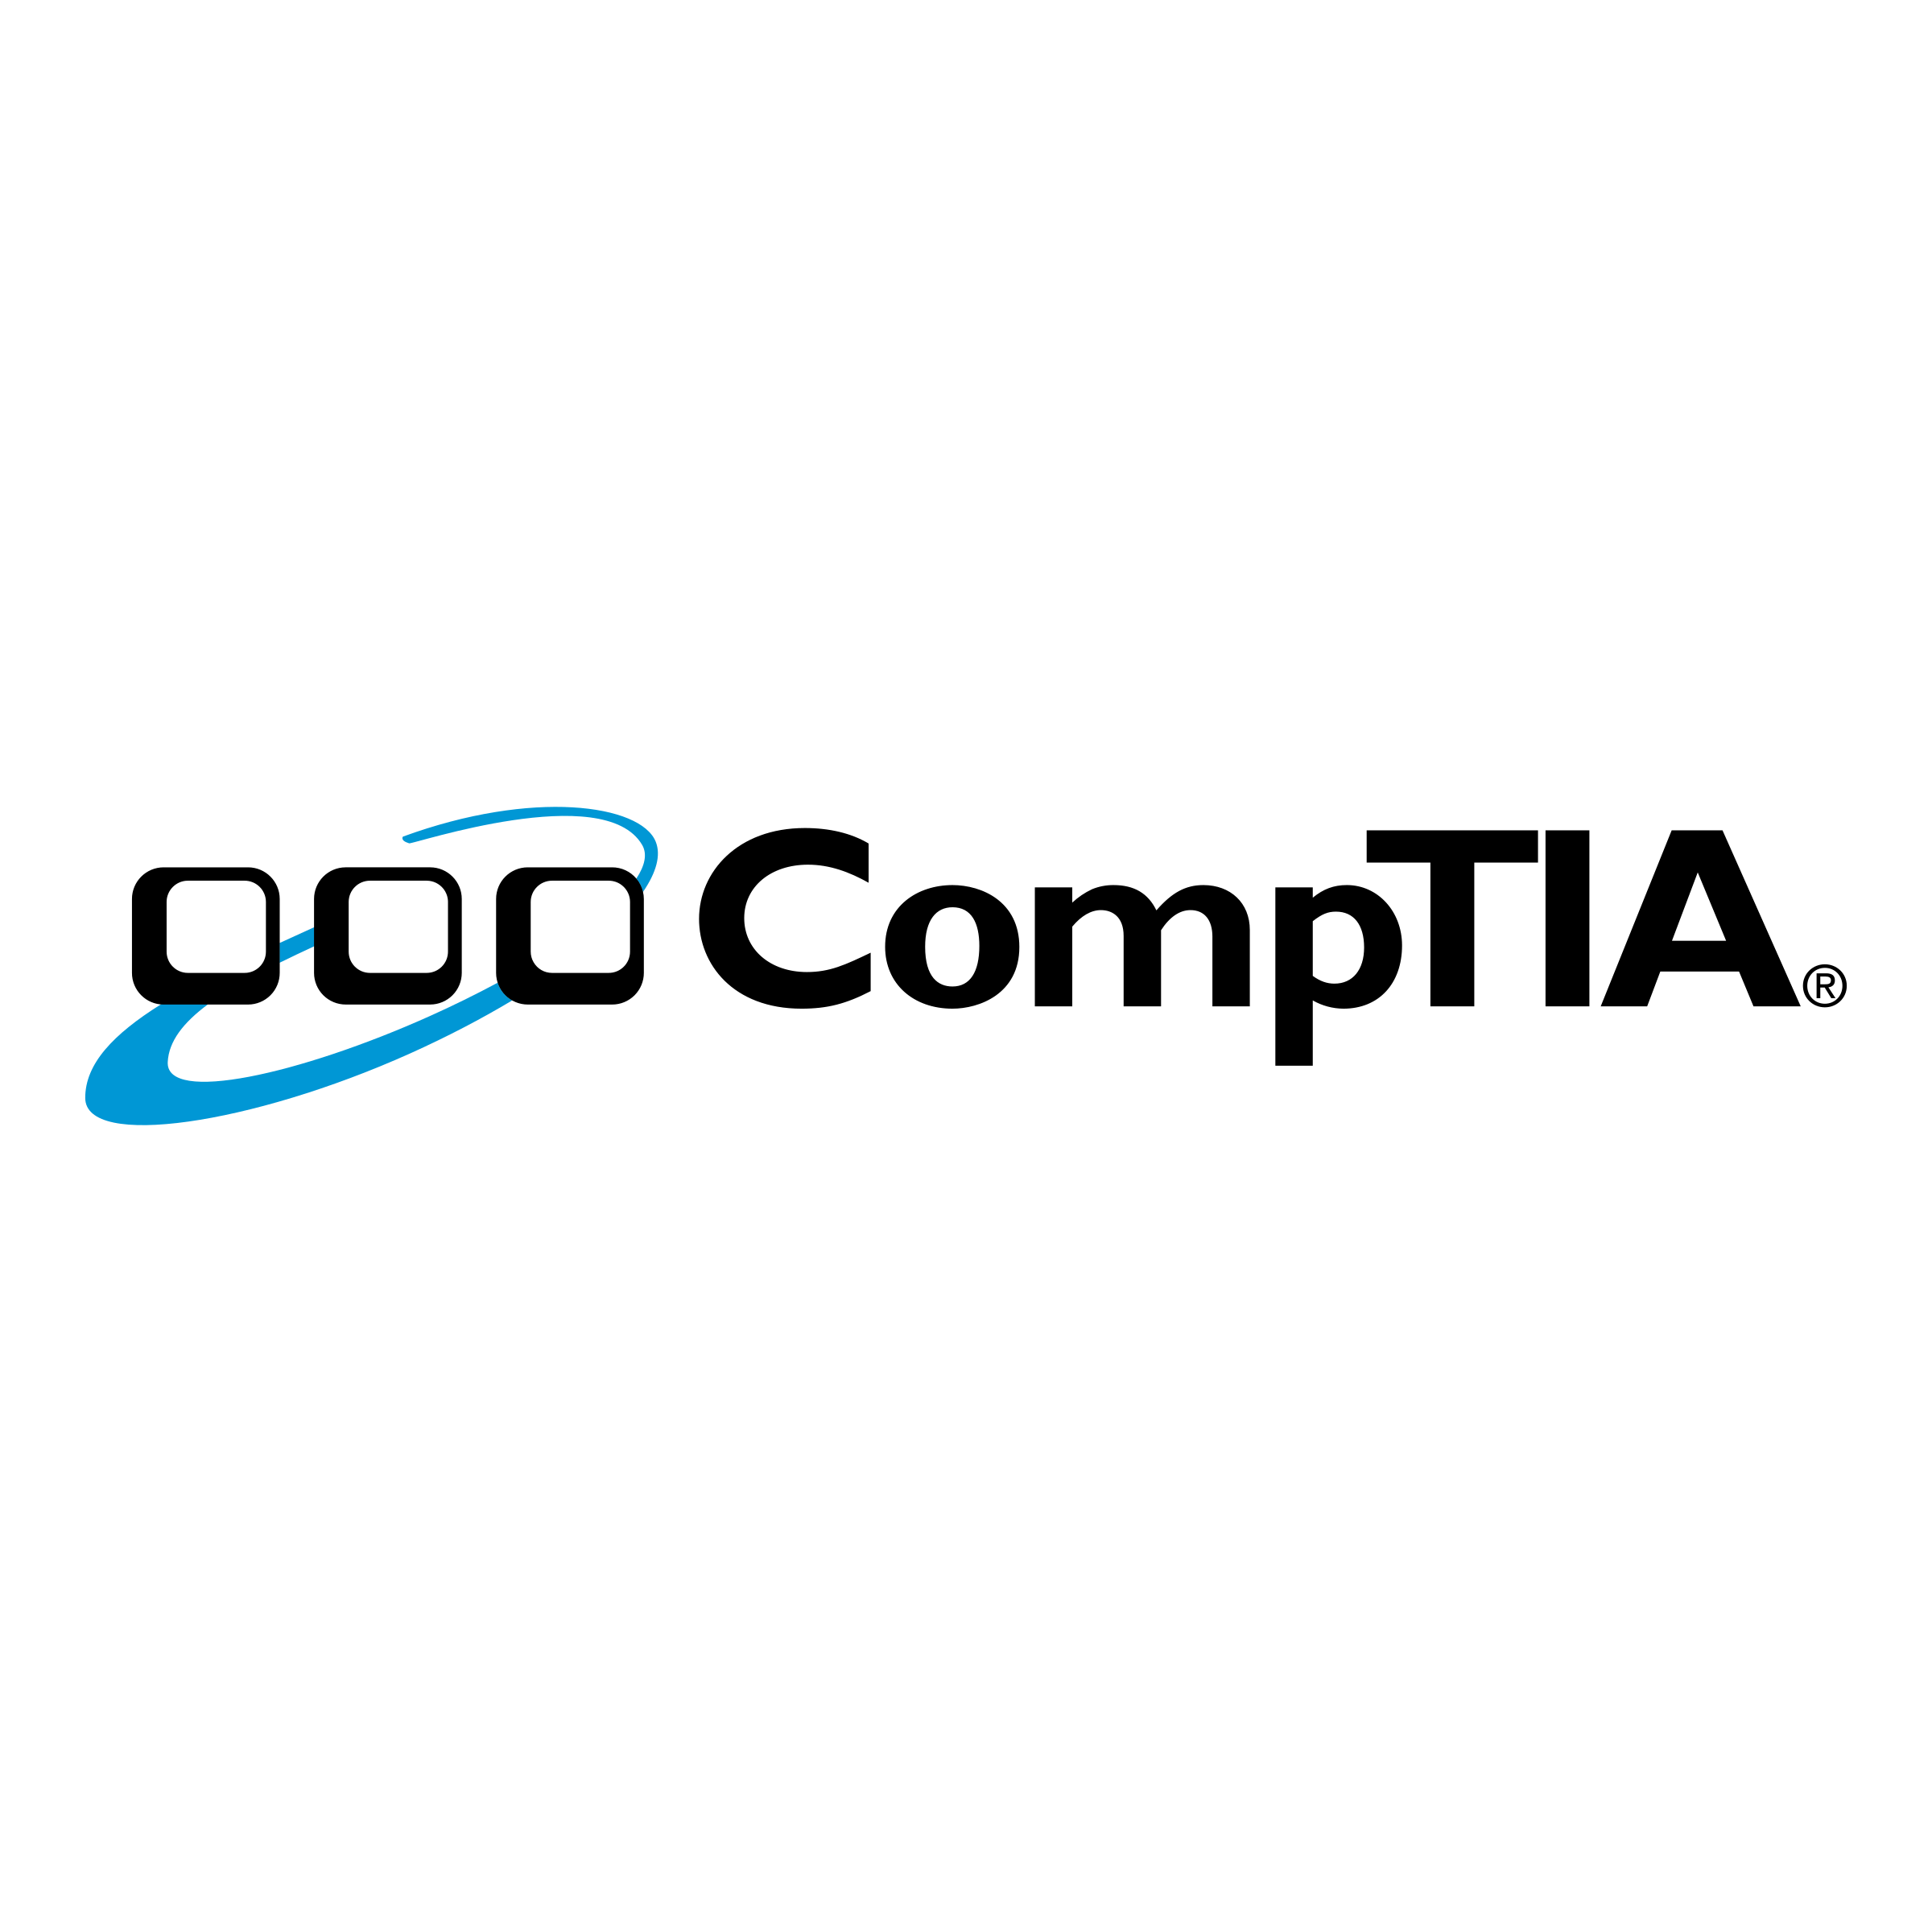 CompTIA Logo - CompTIA Logo PNG Transparent & SVG Vector - Freebie Supply